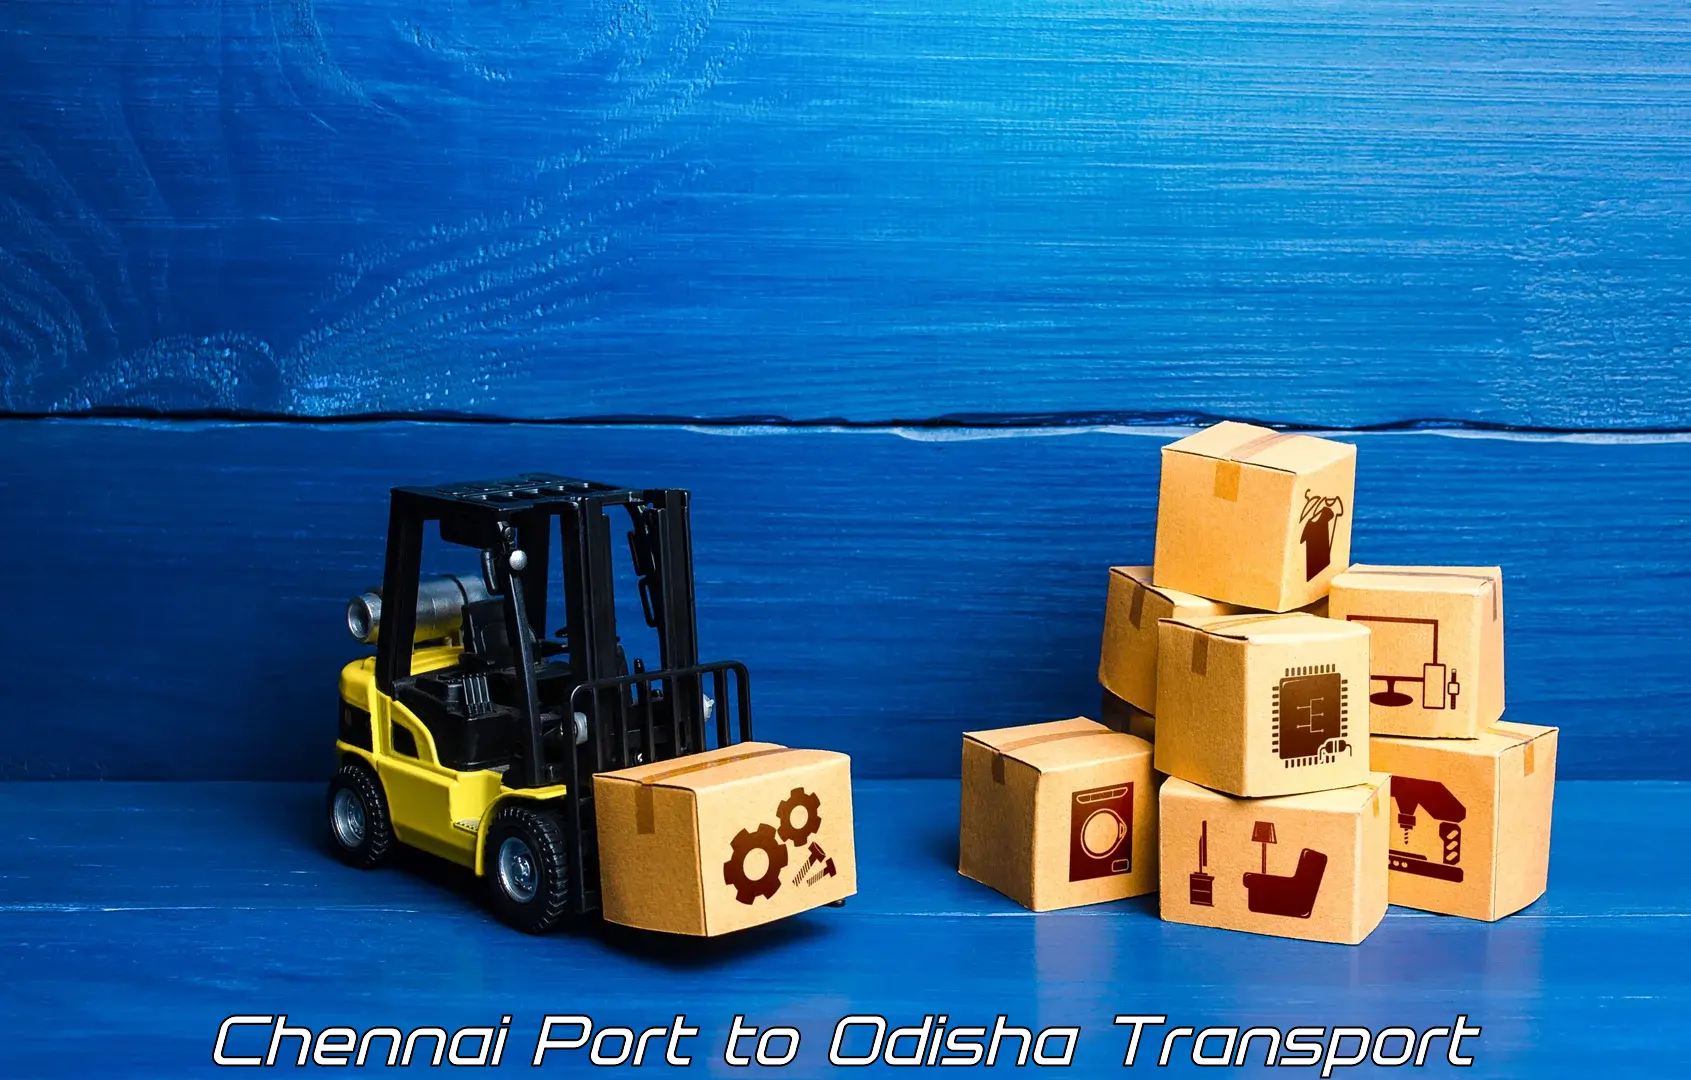 Transport in sharing Chennai Port to Puri